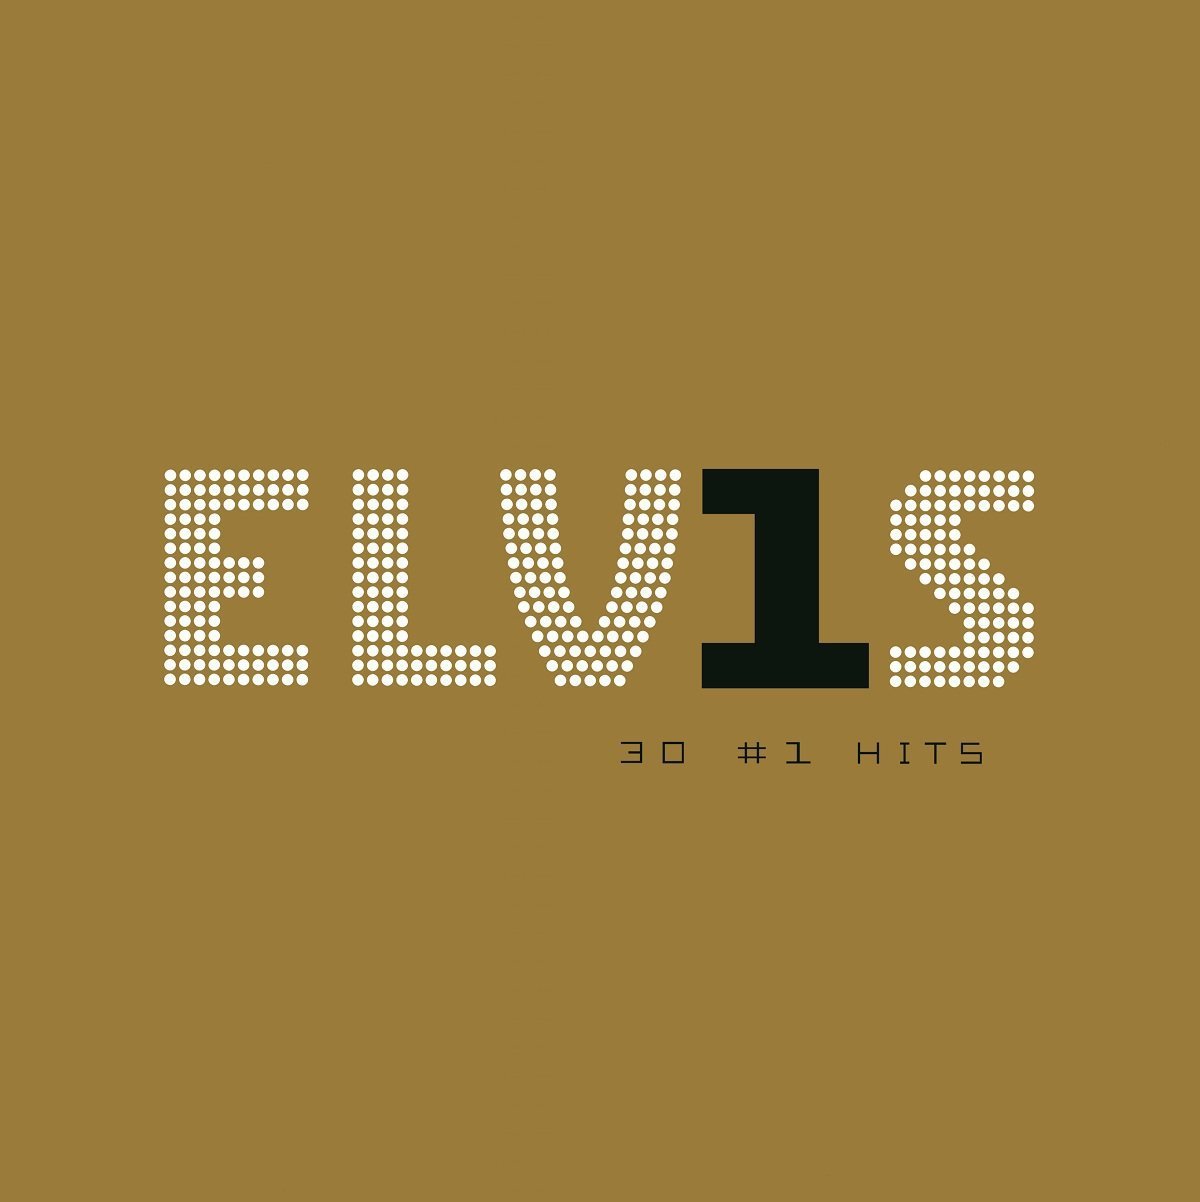 Elvis Presley ELV1S - 30 #1 HITS (180 Gram/Gatefold)